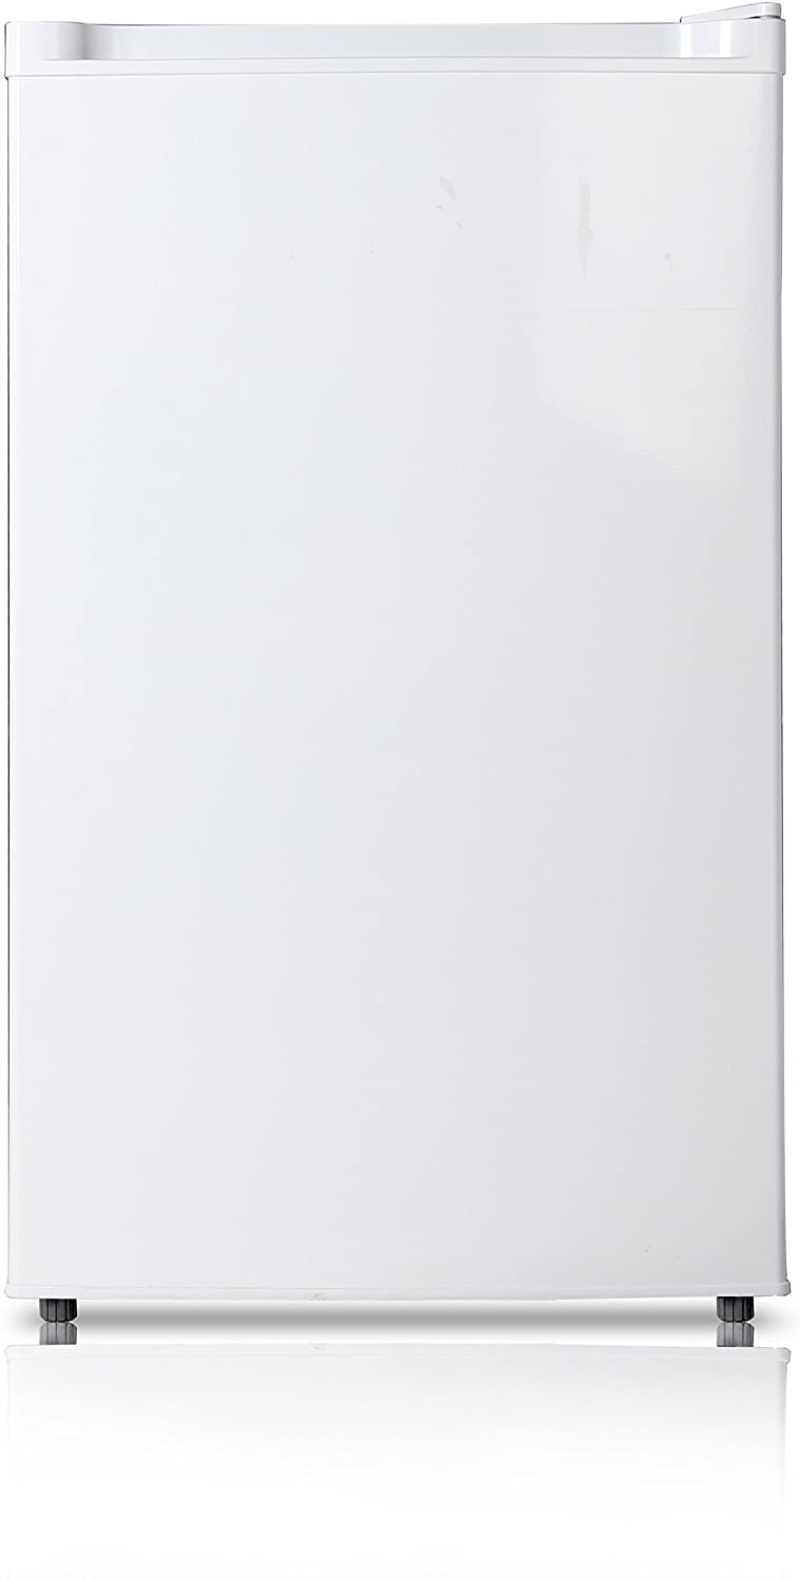 Midea WHS-109FW1 Upright Freezer